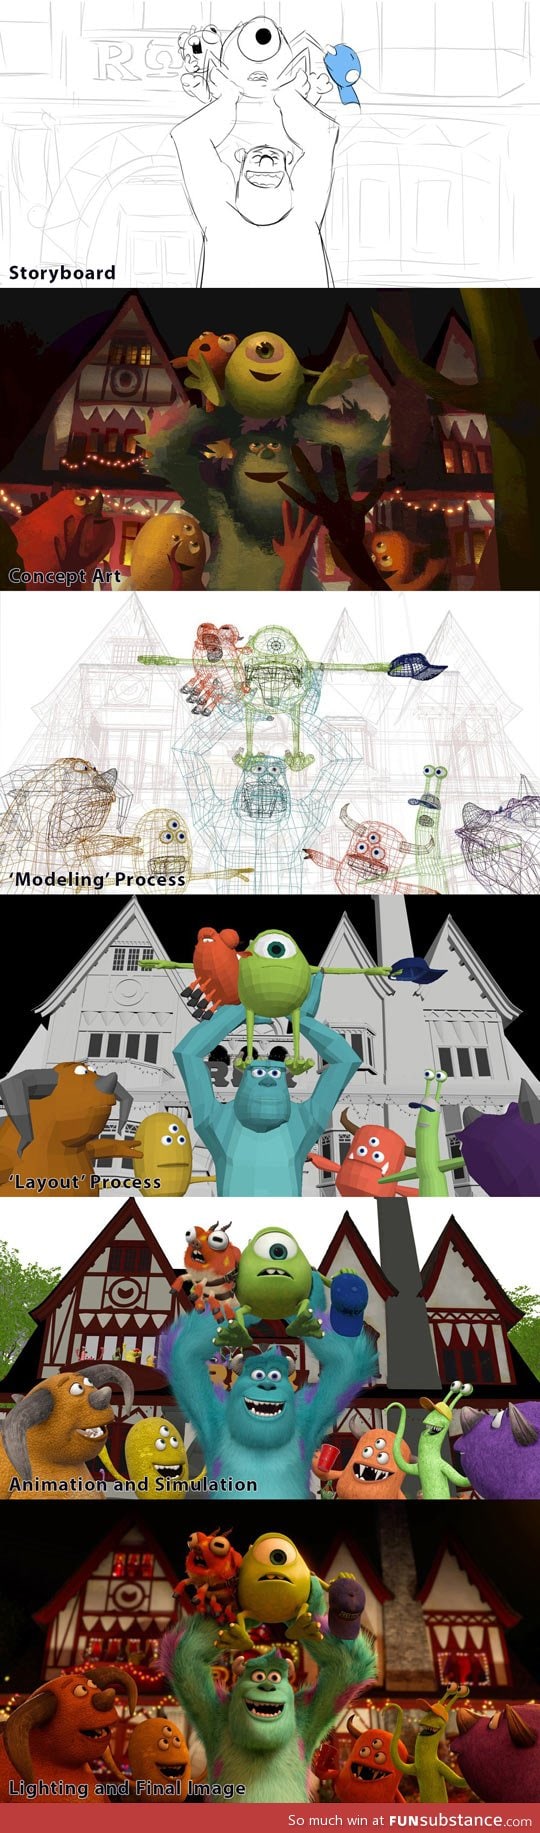 Pixar's development process